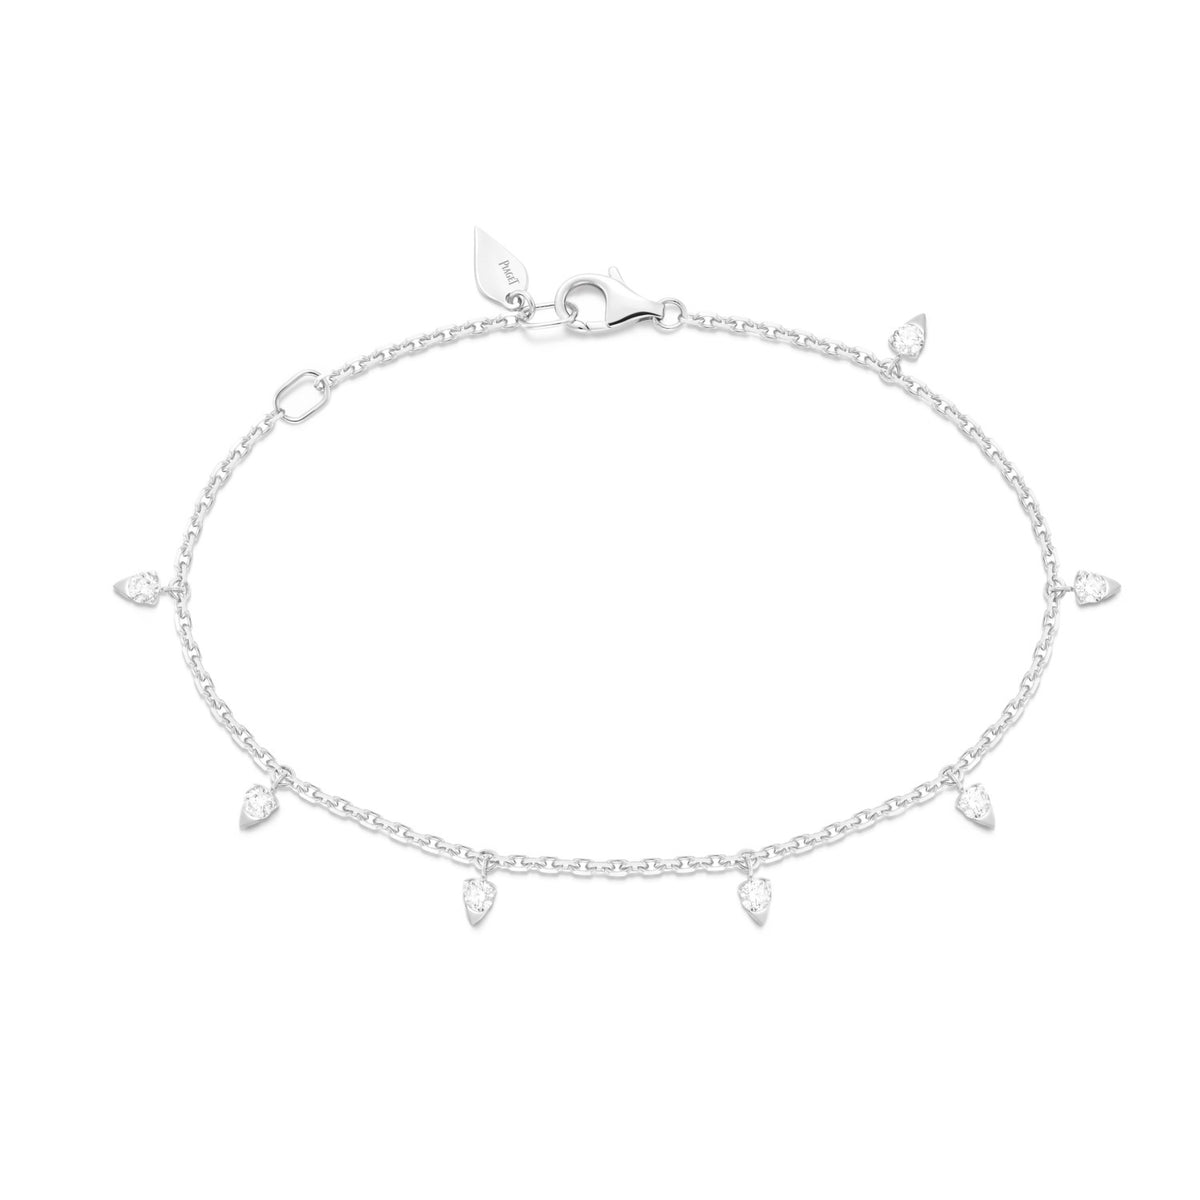 Piaget Sunlight chain bracelet, white gold, brilliant-cut diamonds